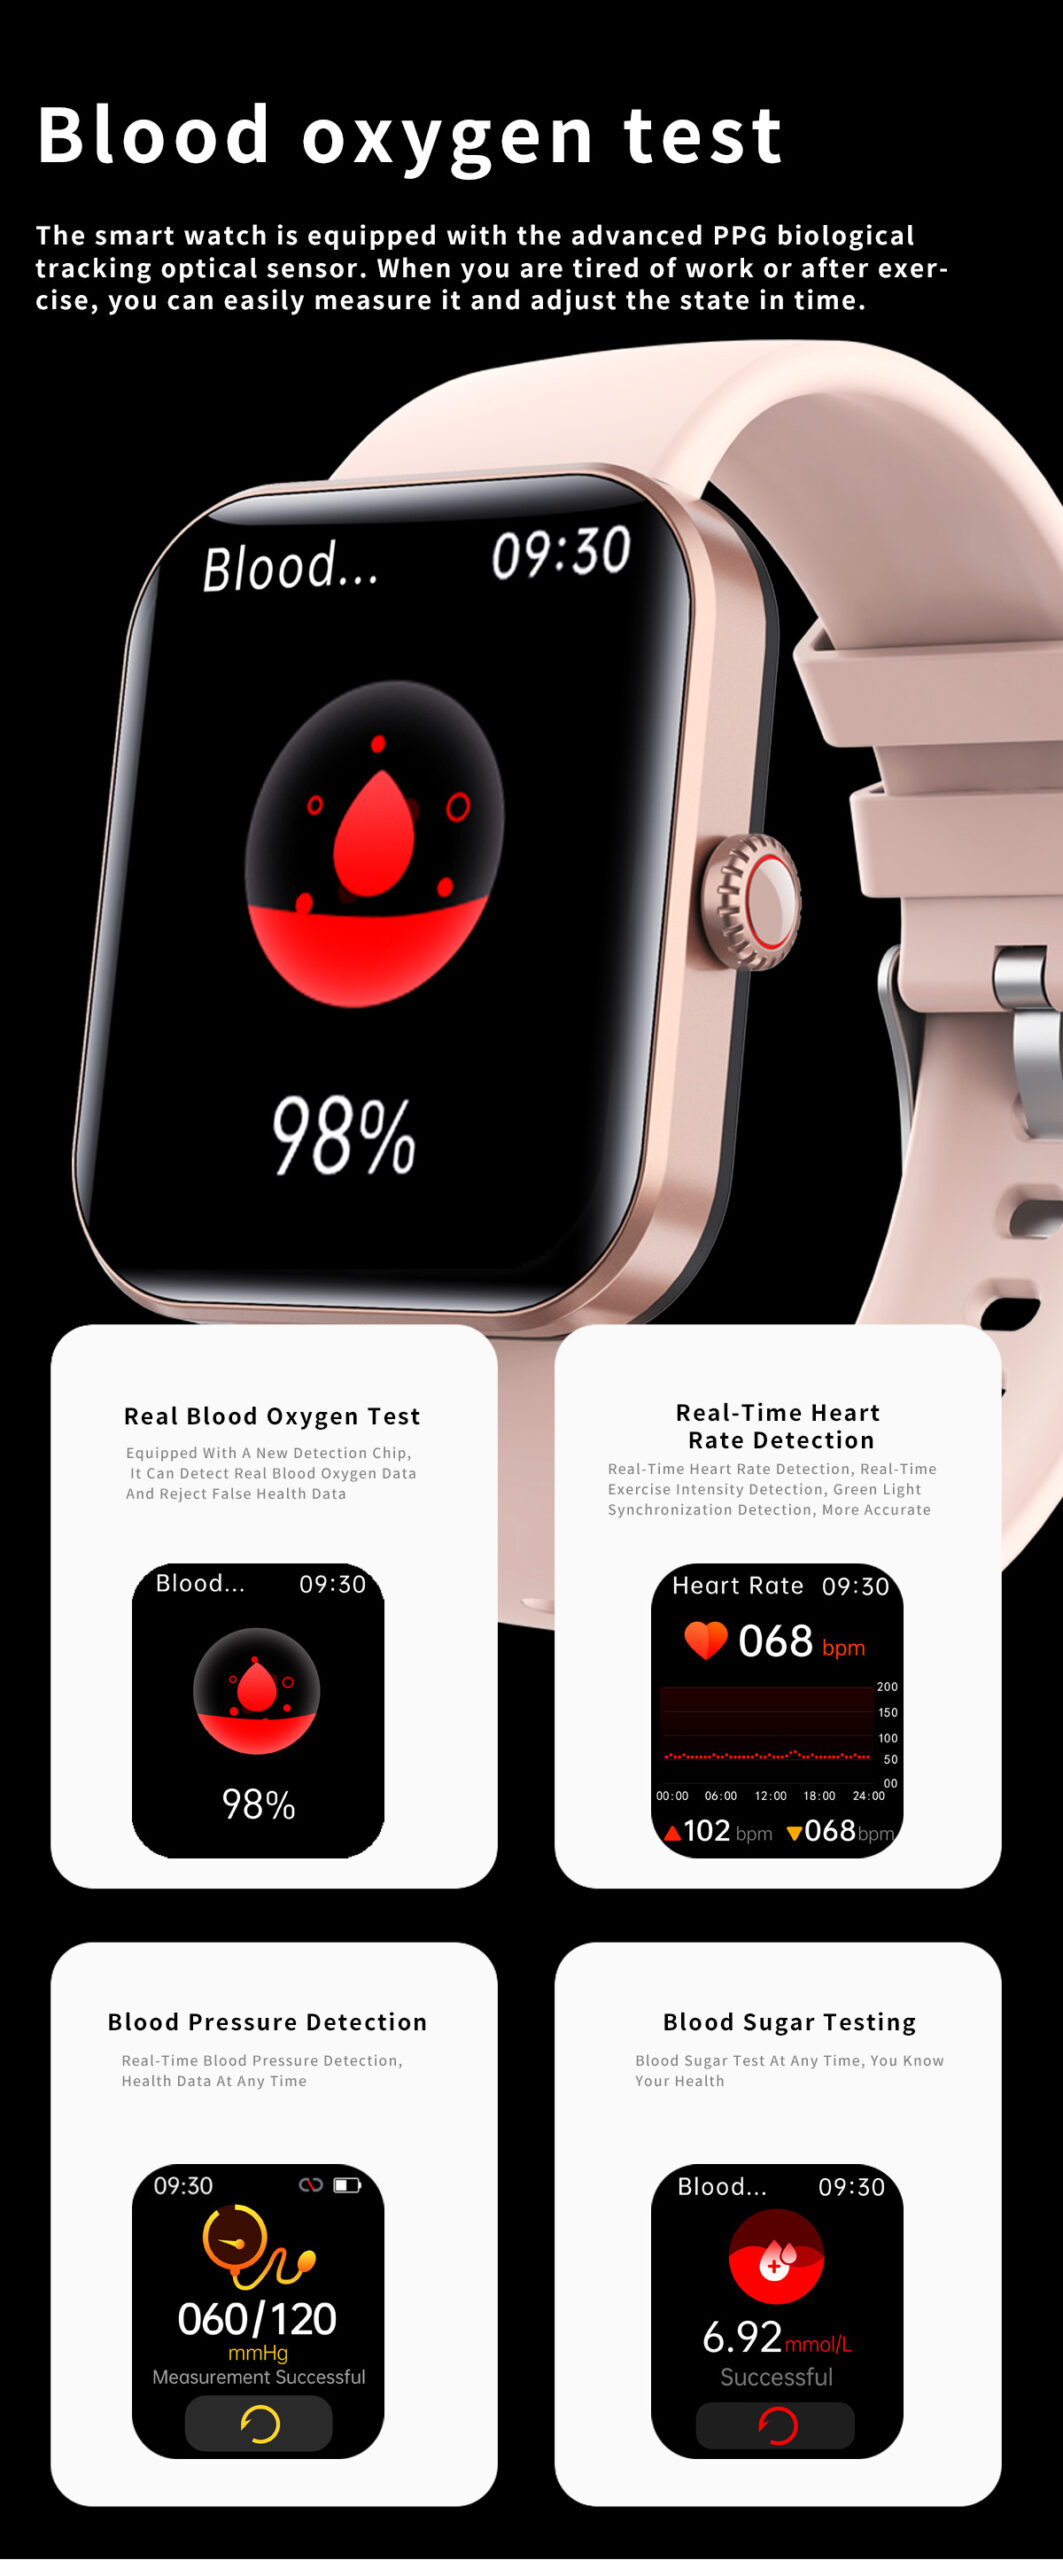 Blood Glucose Monitoring Smartwatch | Smart Watch for Non-Invasive Blood Glucose Testing - Blood Glucose Monitoring Smartwatch Smart Watch for Non Invasive Blood Glucose Testing 8 scaled